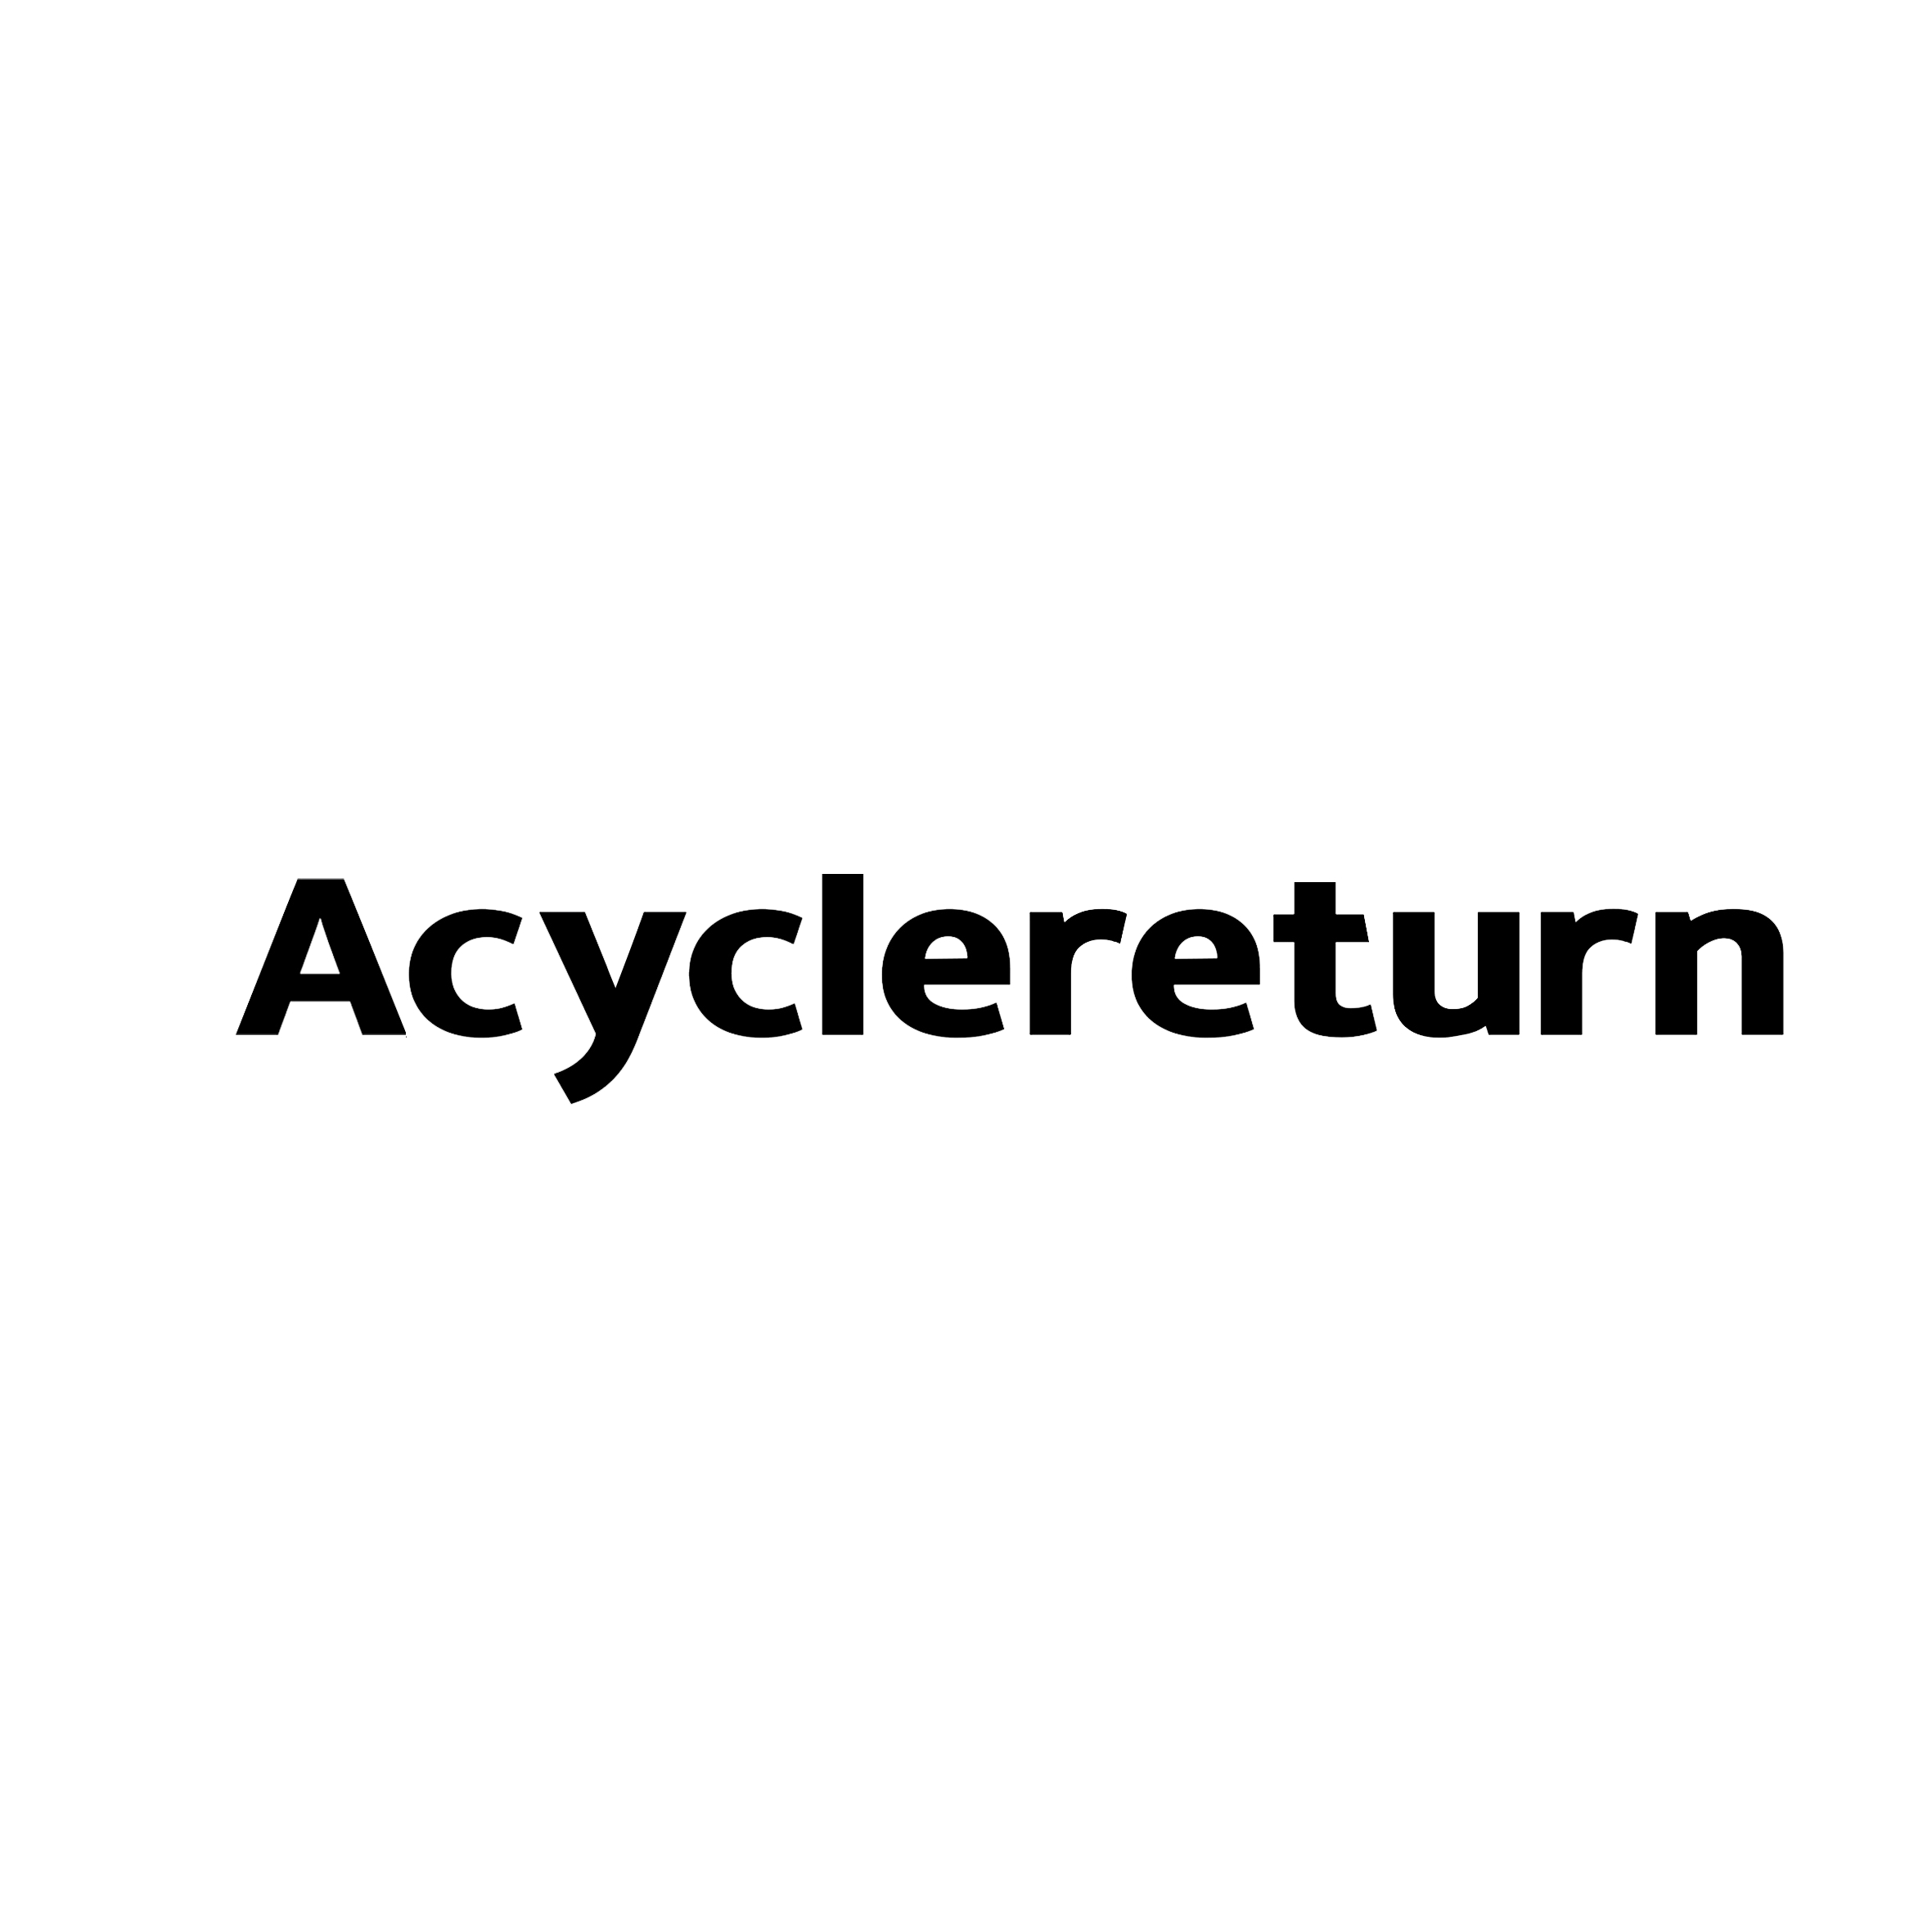 Acyclereturn